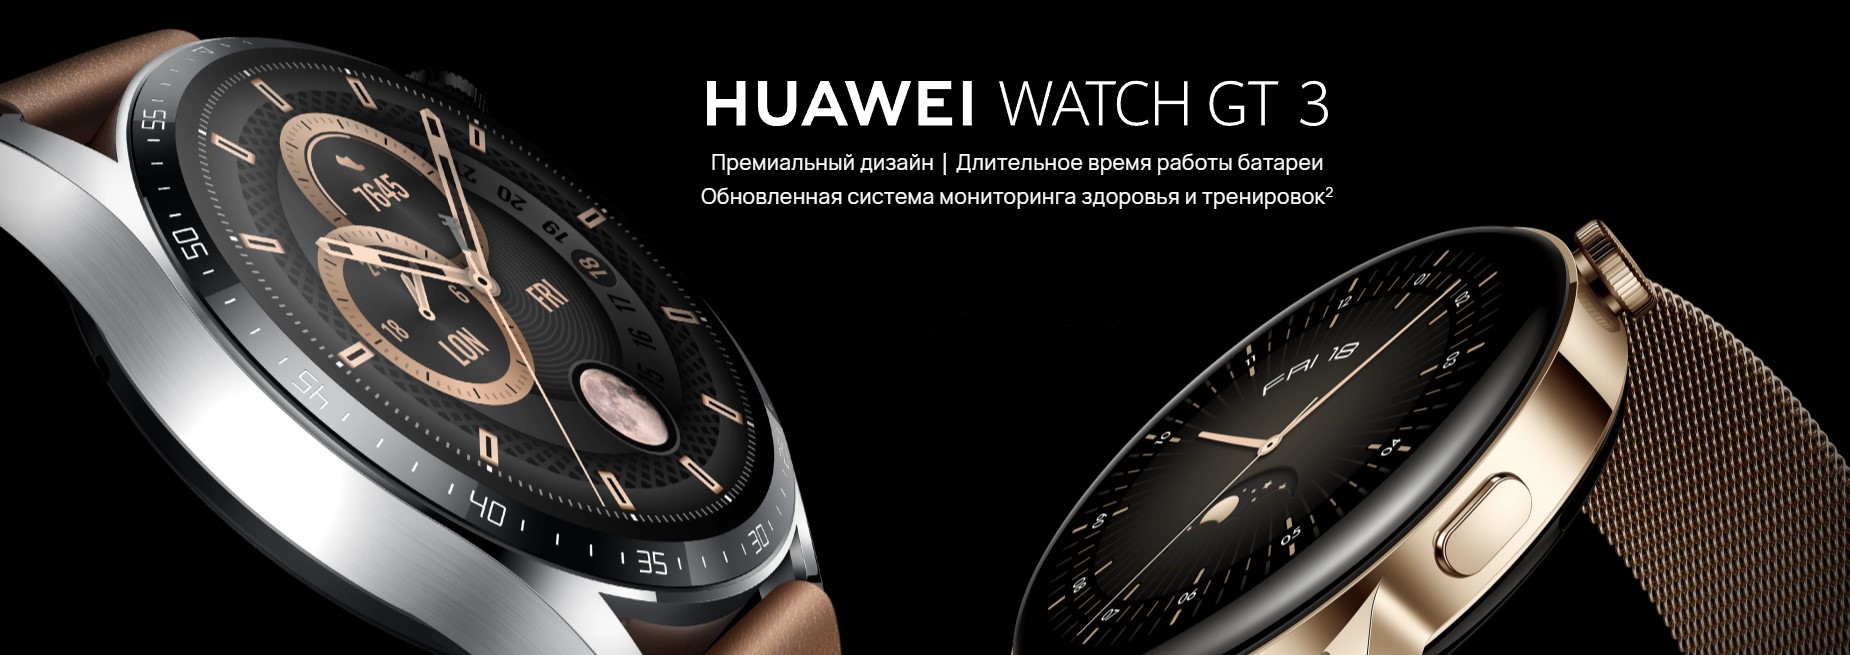 Huawei gt 3 mil b19 gold ss. Смарт-часы Huawei gt 3 JPT-b29. Huawei watch gt 3 Elite. Смарт-часы Huawei gt 3 mil-b19 Black SS / Black Fluoroelastomer. Huawei watch gt3 Jupiter.